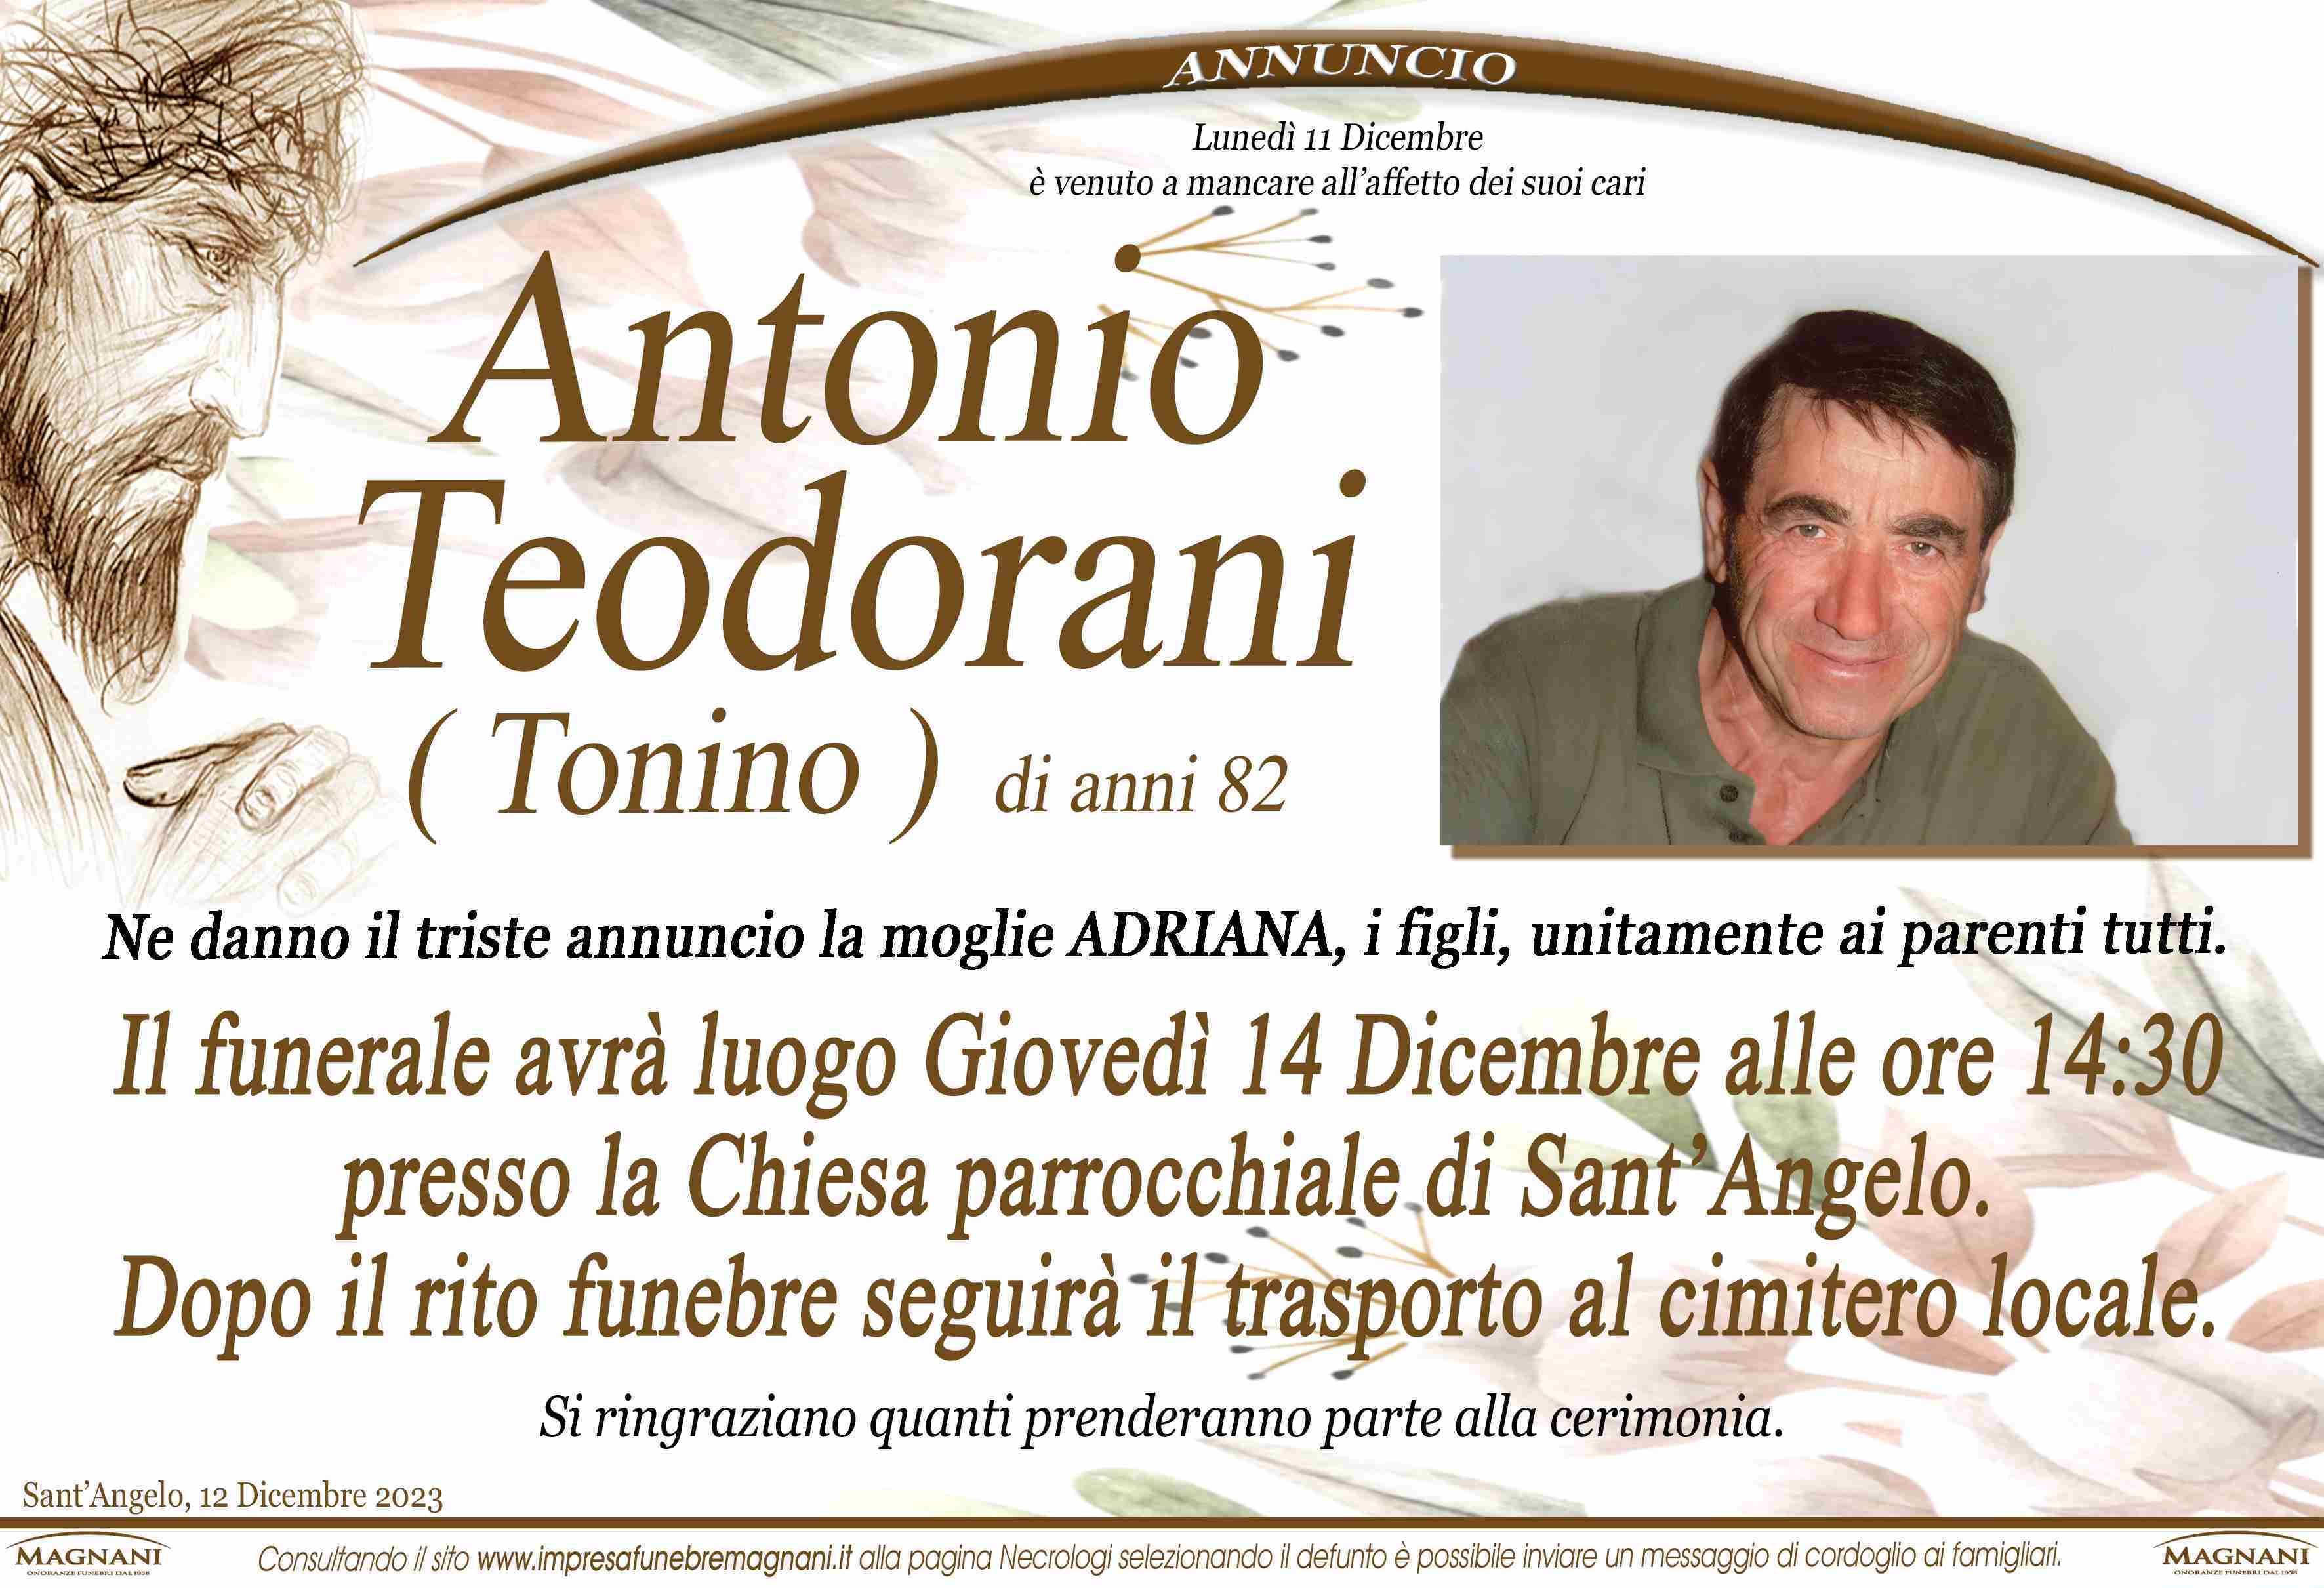 Antonio Teodorani